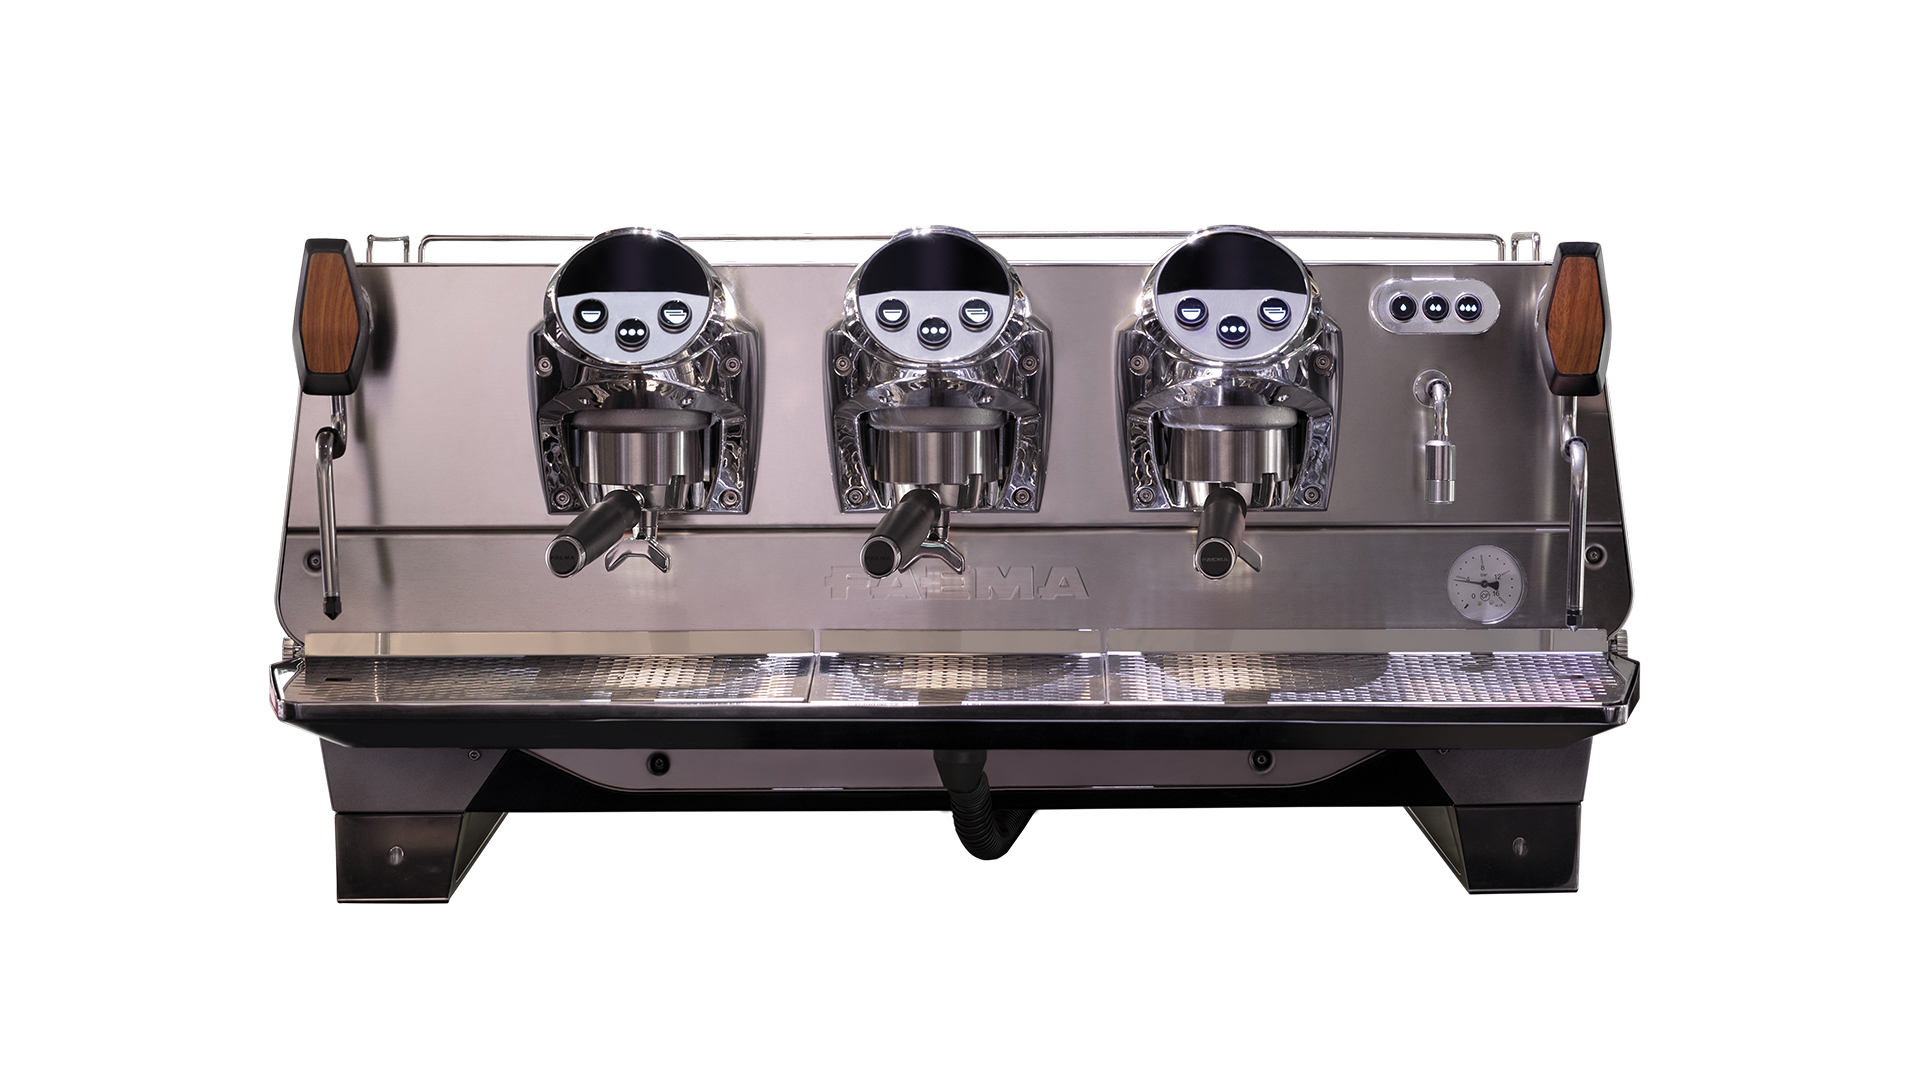 Faema GTi professionel espressomaskine Bentax